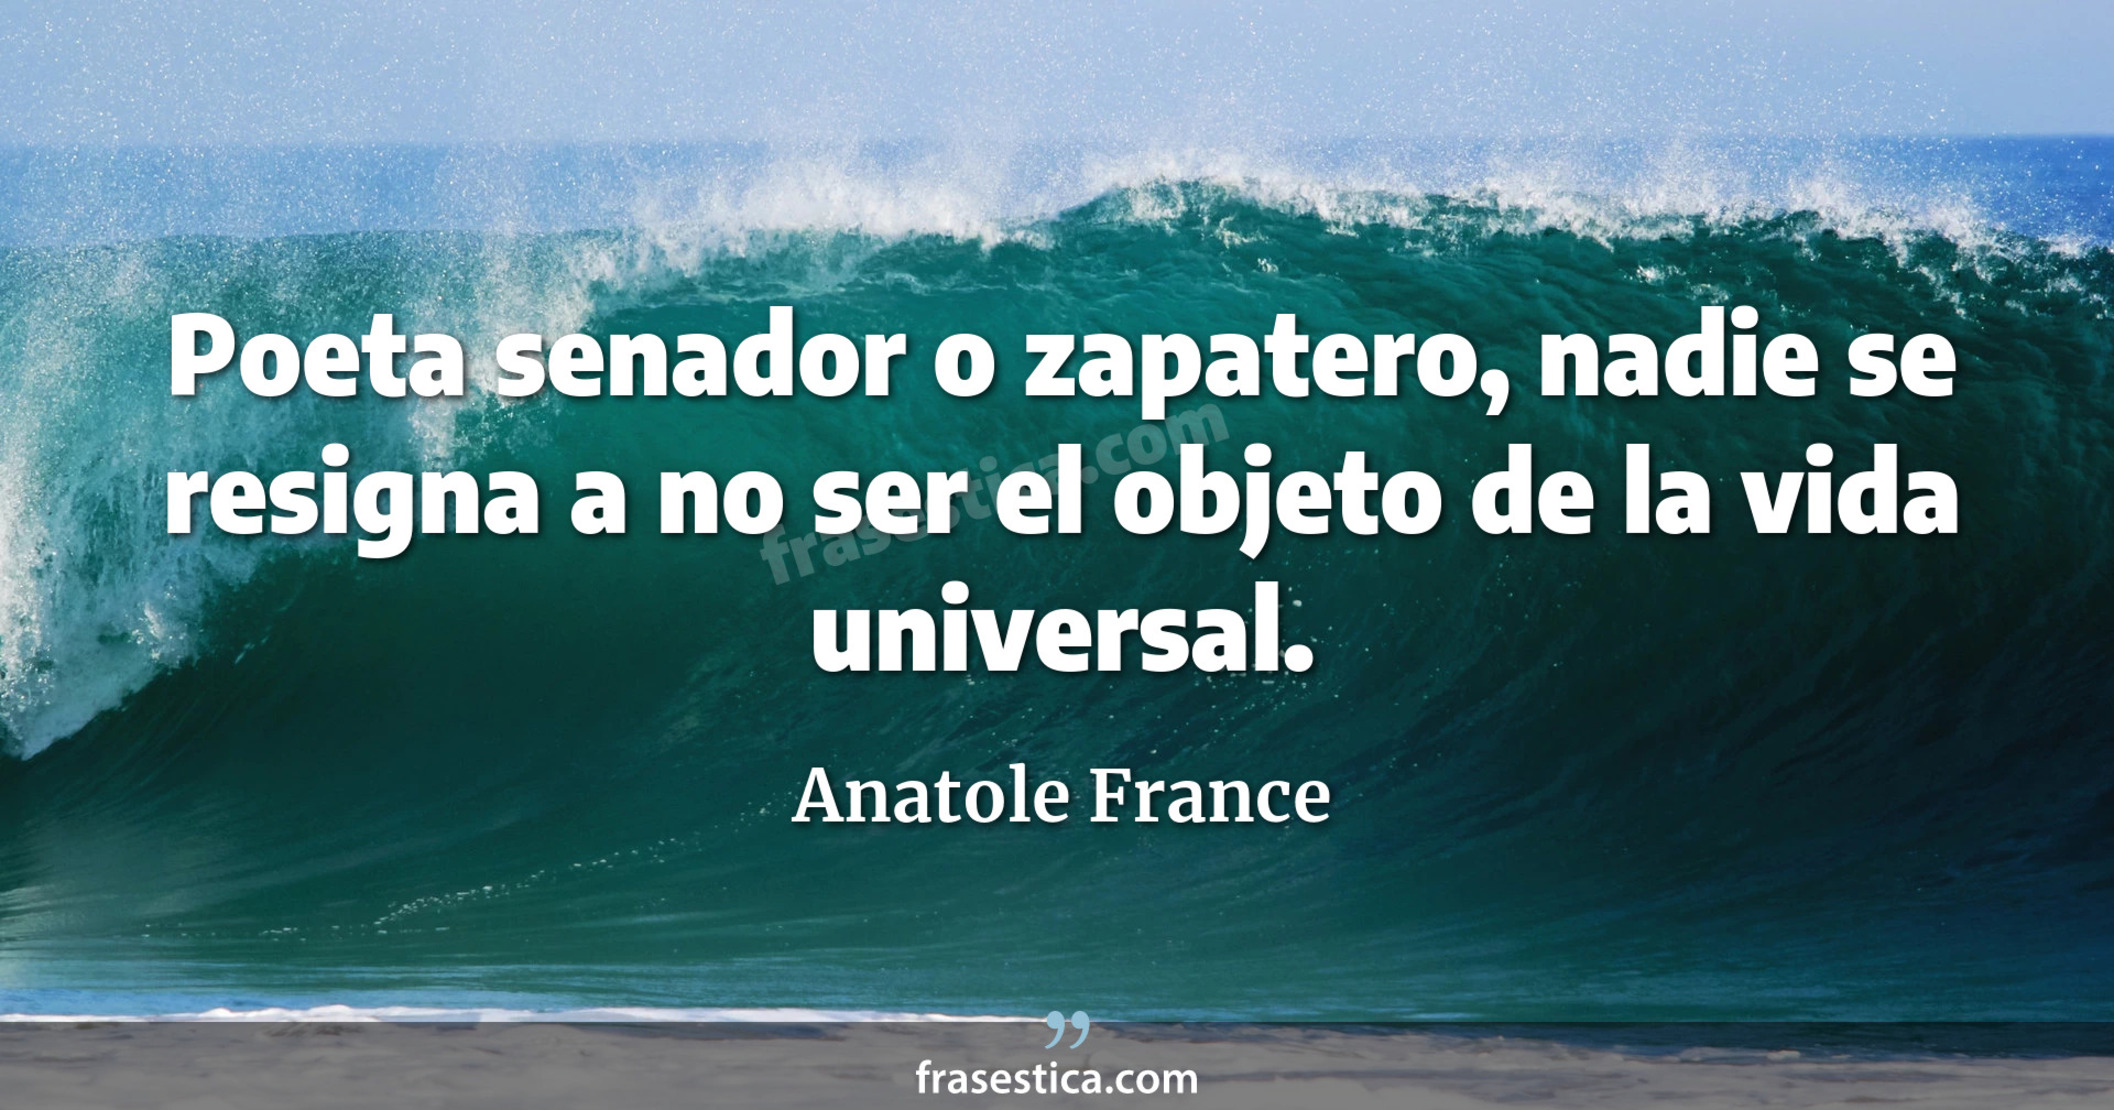 Poeta senador o zapatero, nadie se resigna a no ser el objeto de la vida universal. - Anatole France